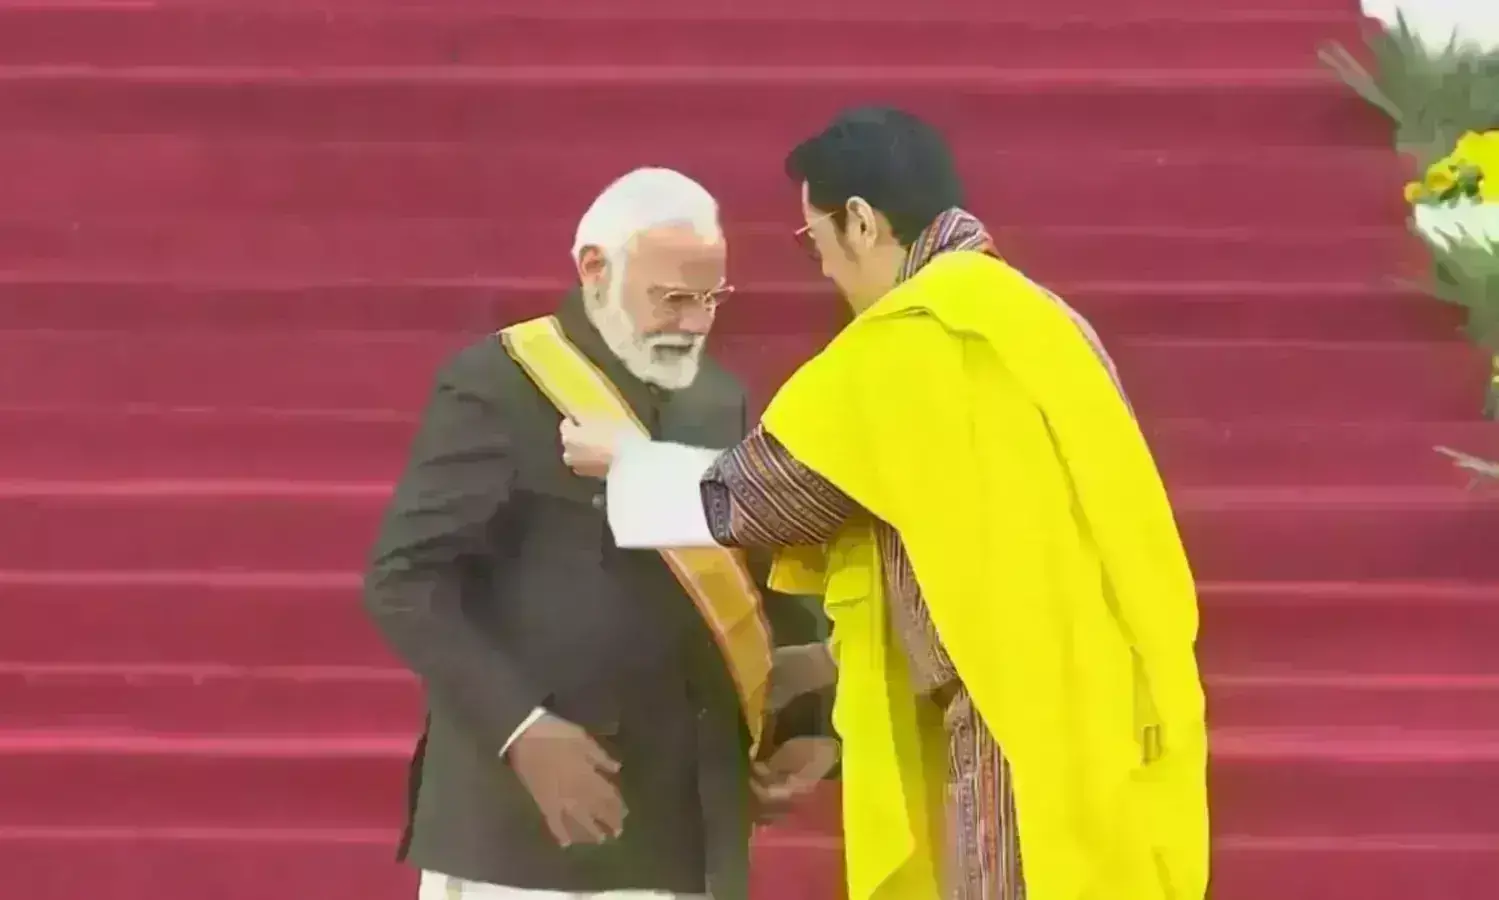 भूटान ने प्रधानमंत्री मोदी को दिया सर्वोच्च सम्मान, ऑर्डर ऑफ द ड्रुक ग्यालपो से नवाजा